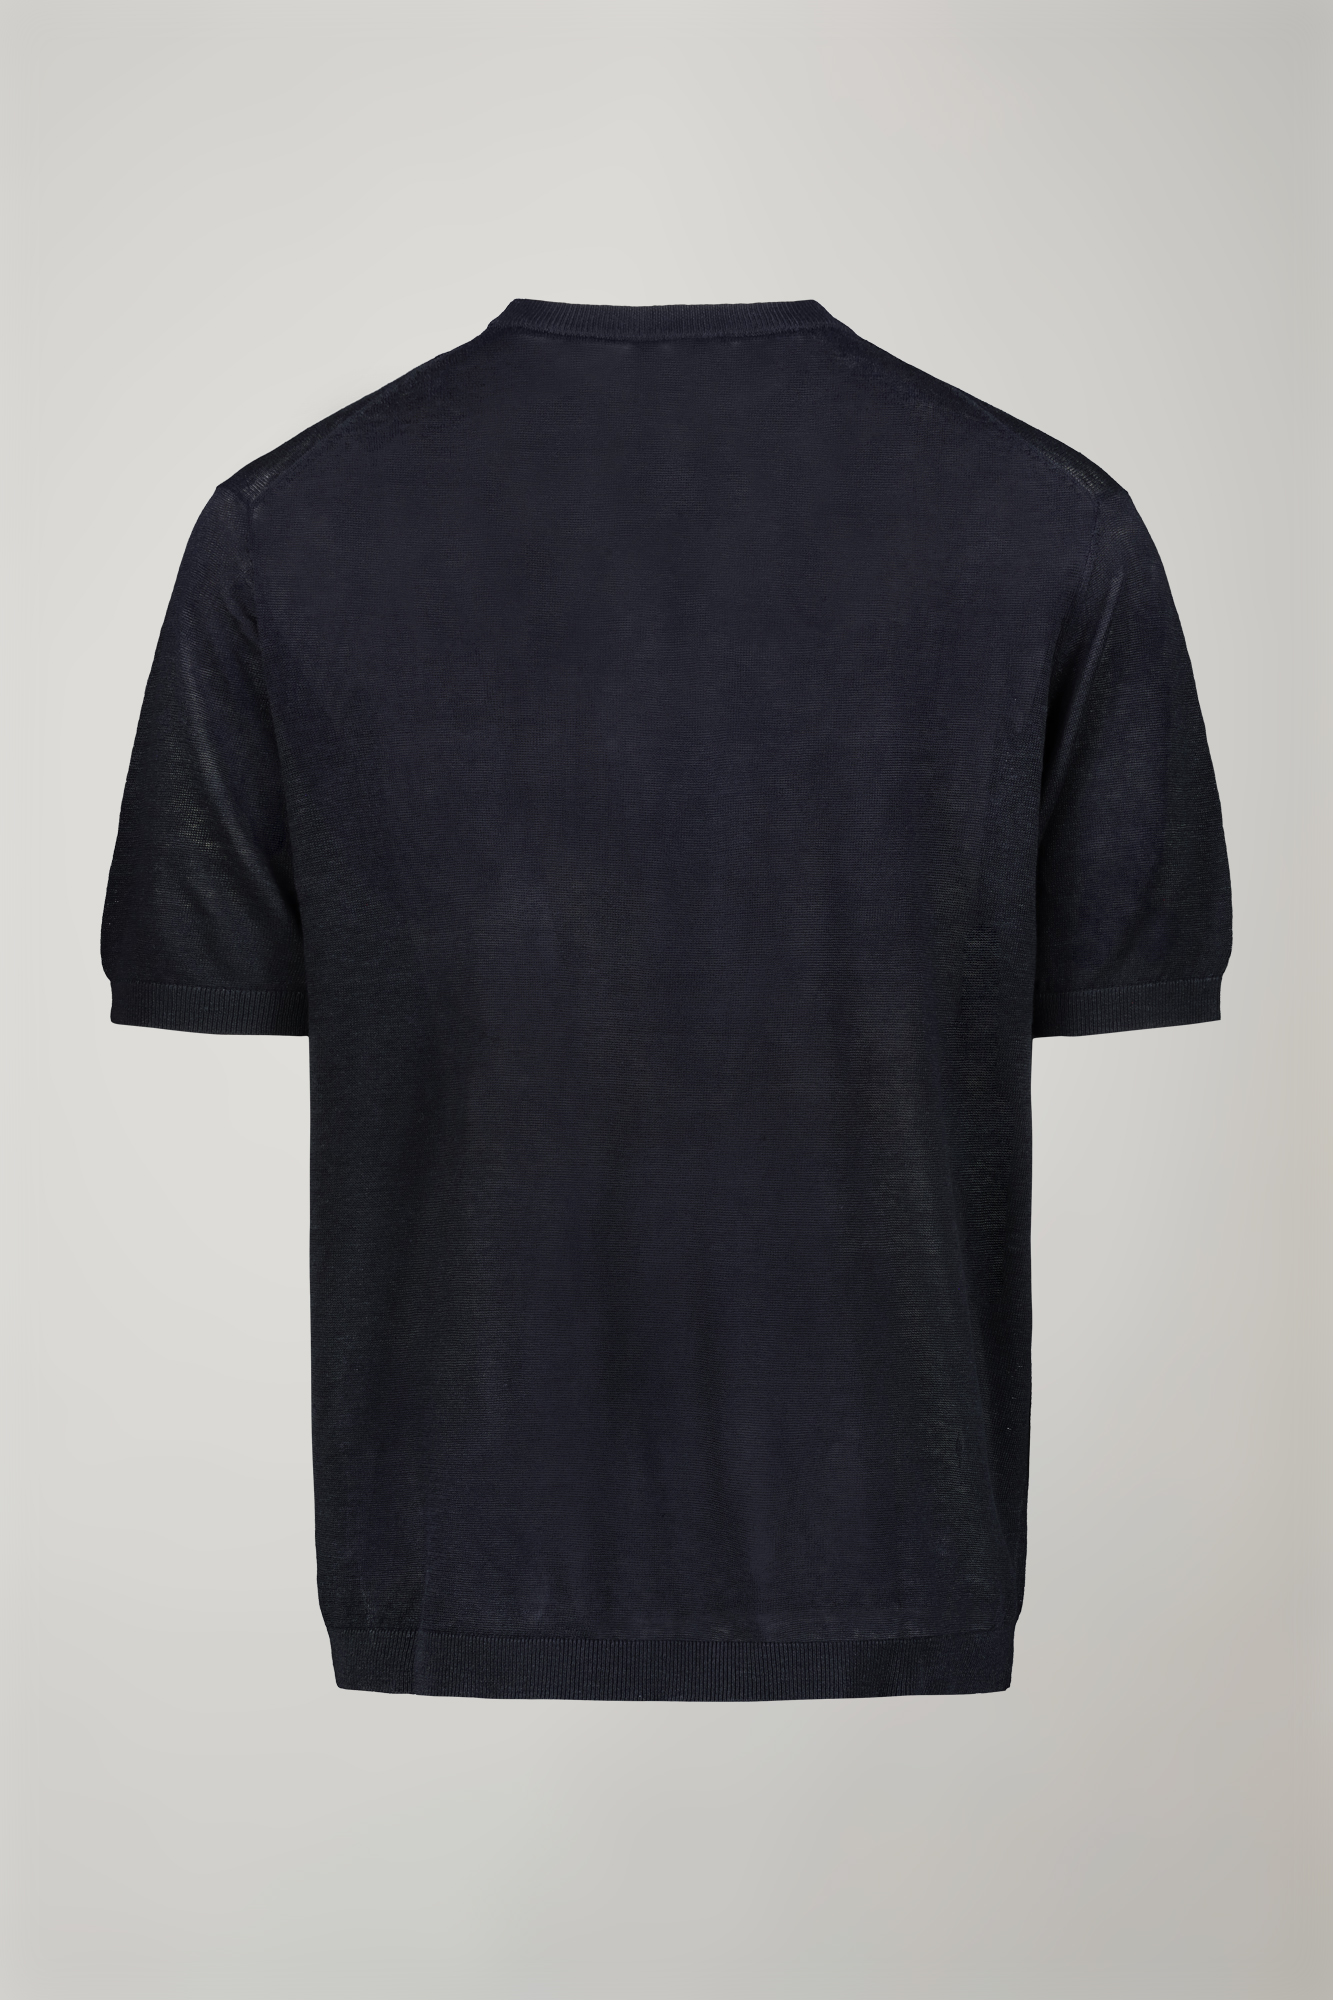 Men's knitted t-shirt 100% linen short-sleeved regular fit image number null